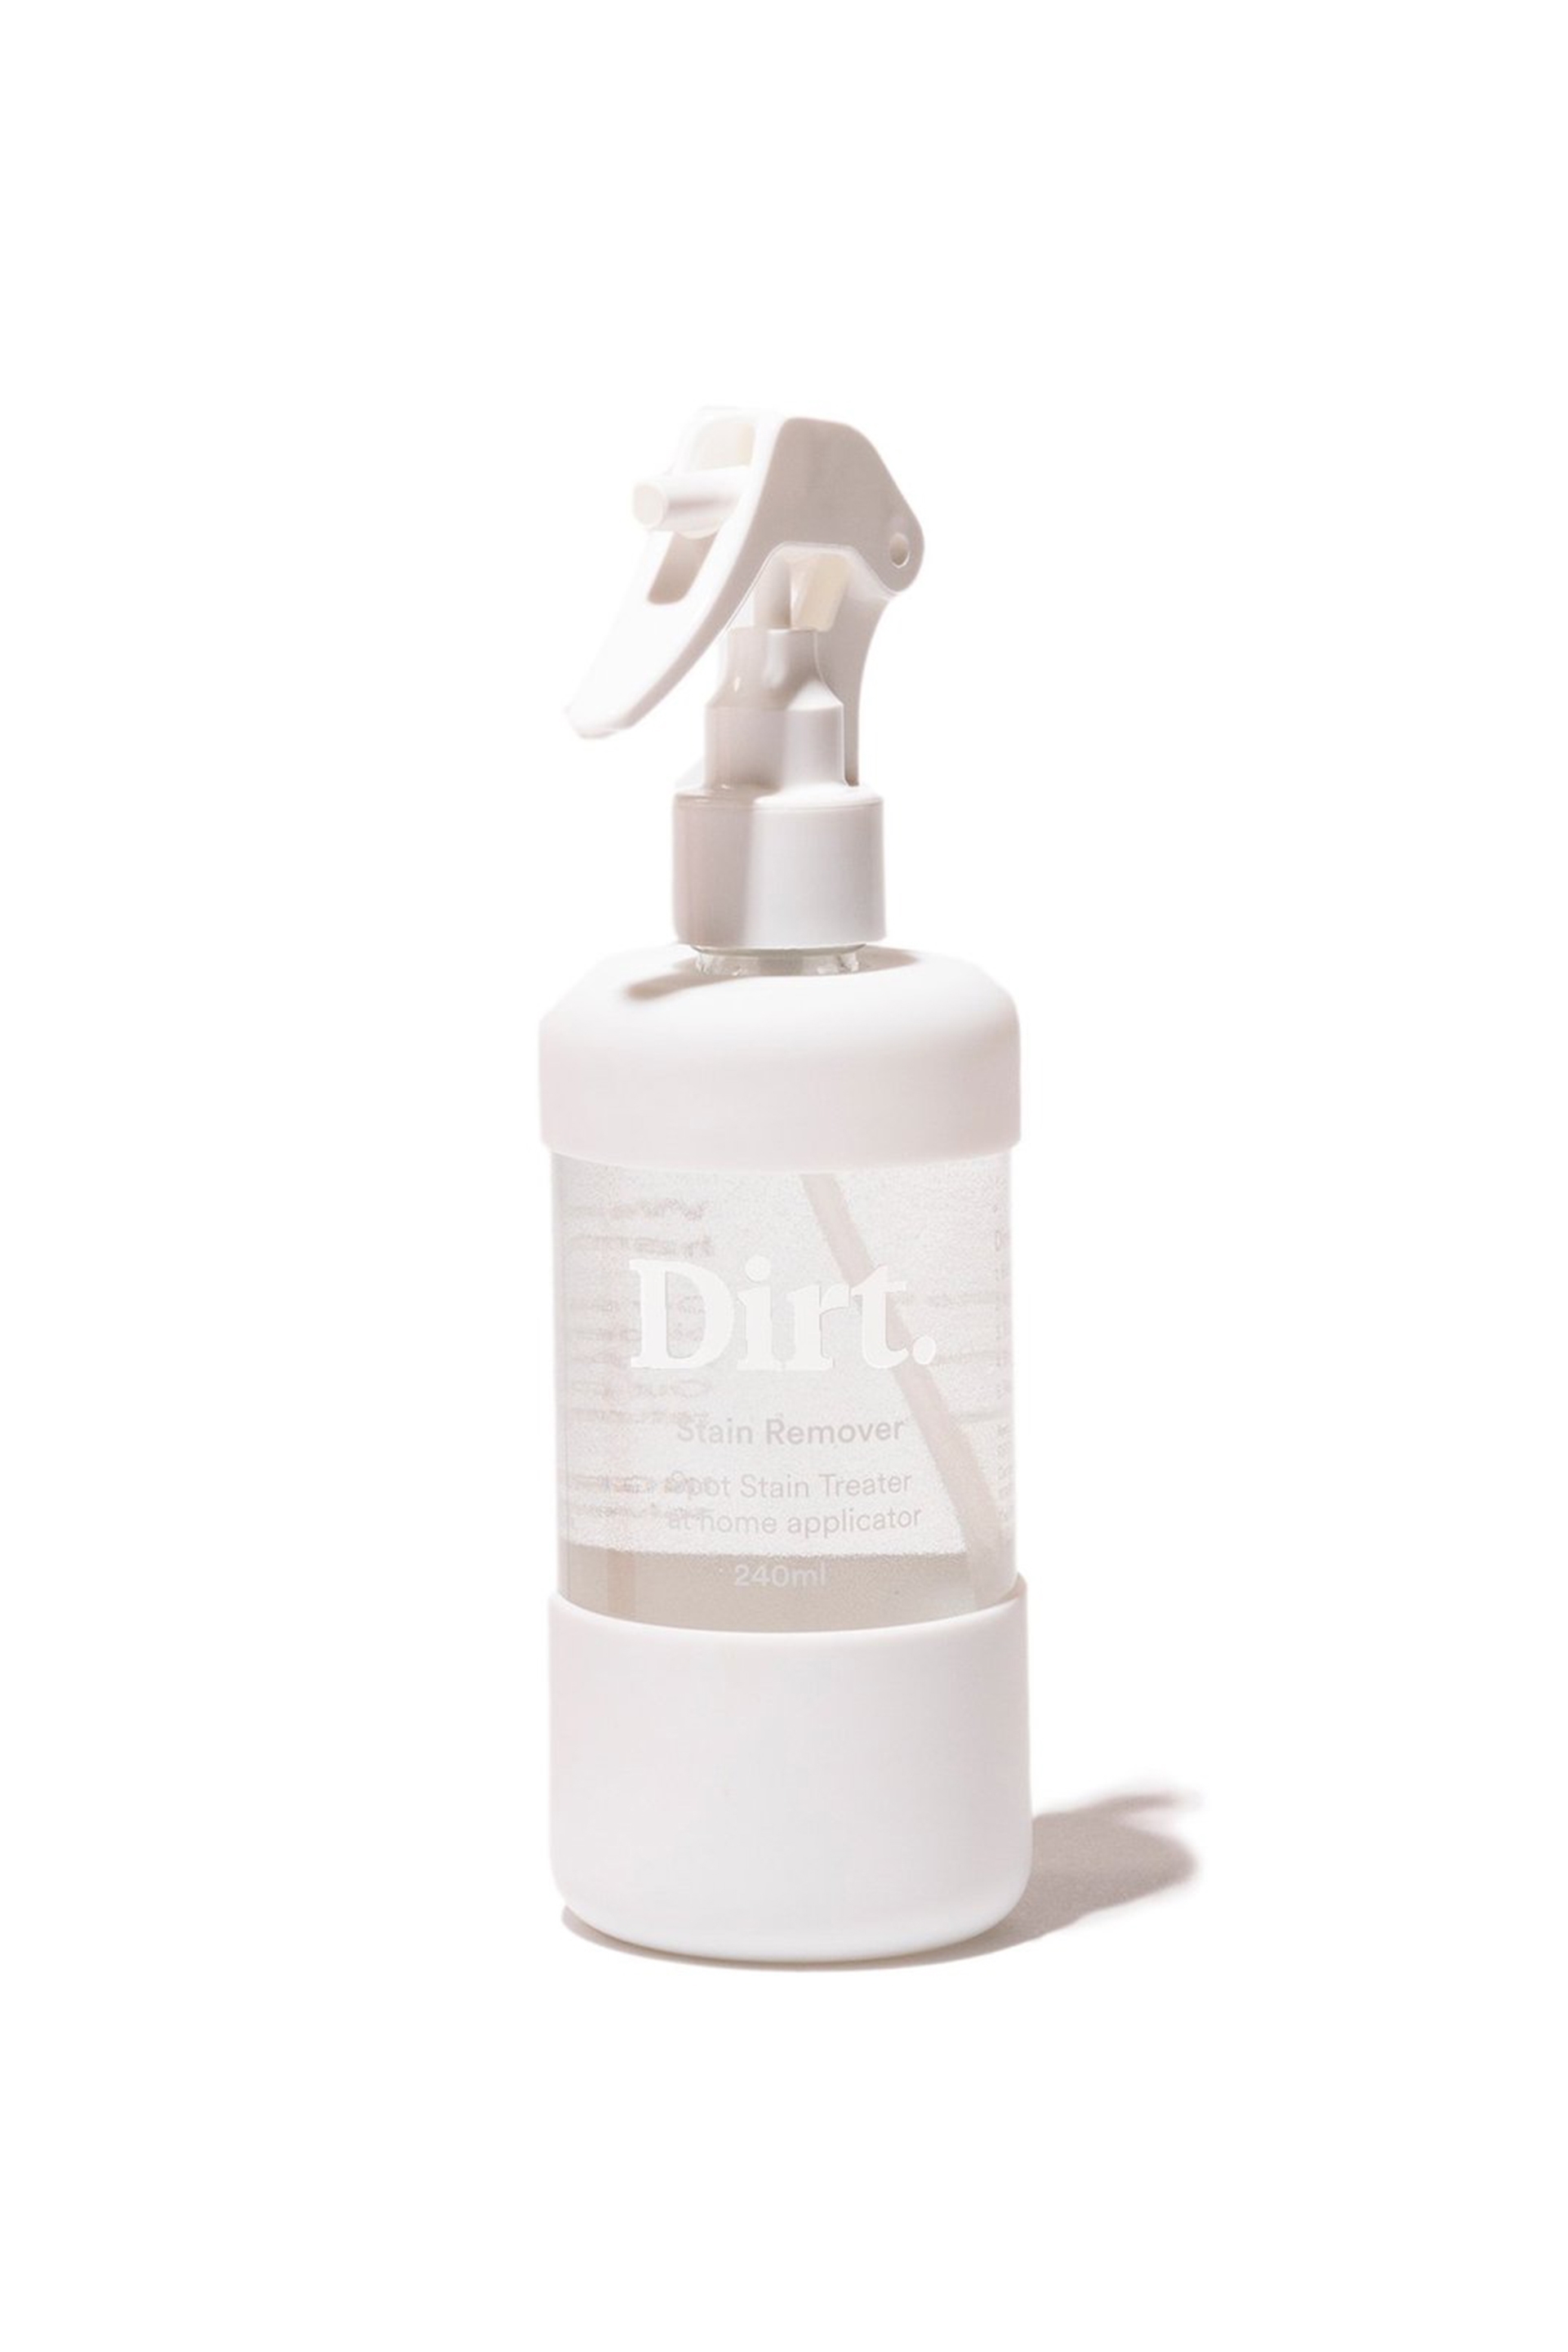 Cotton On Foundation - Dirt Stain Removal Spray Bottle - 240ml spray bottle